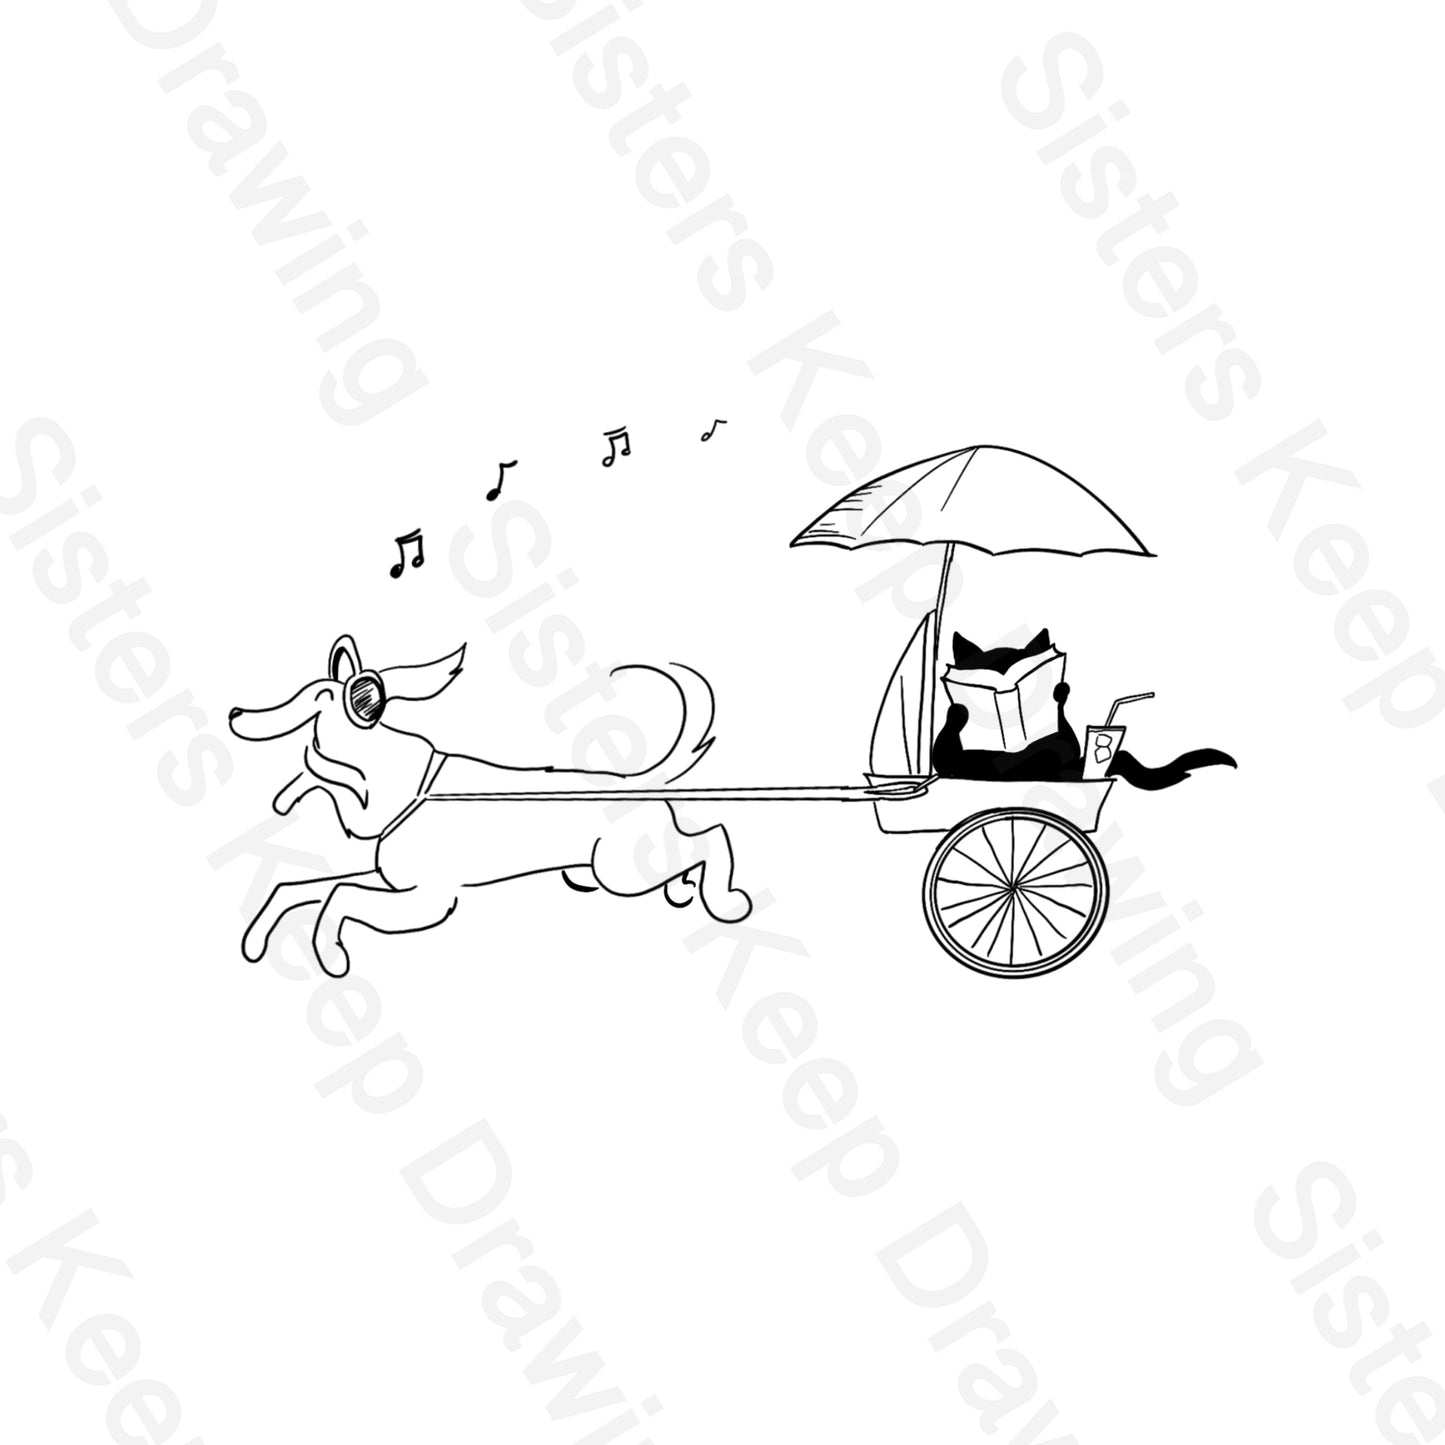 Black Cat & Golden Retriever Going for a Run- Tattoo Transparent Permission PNG- instant download digital printable artwork